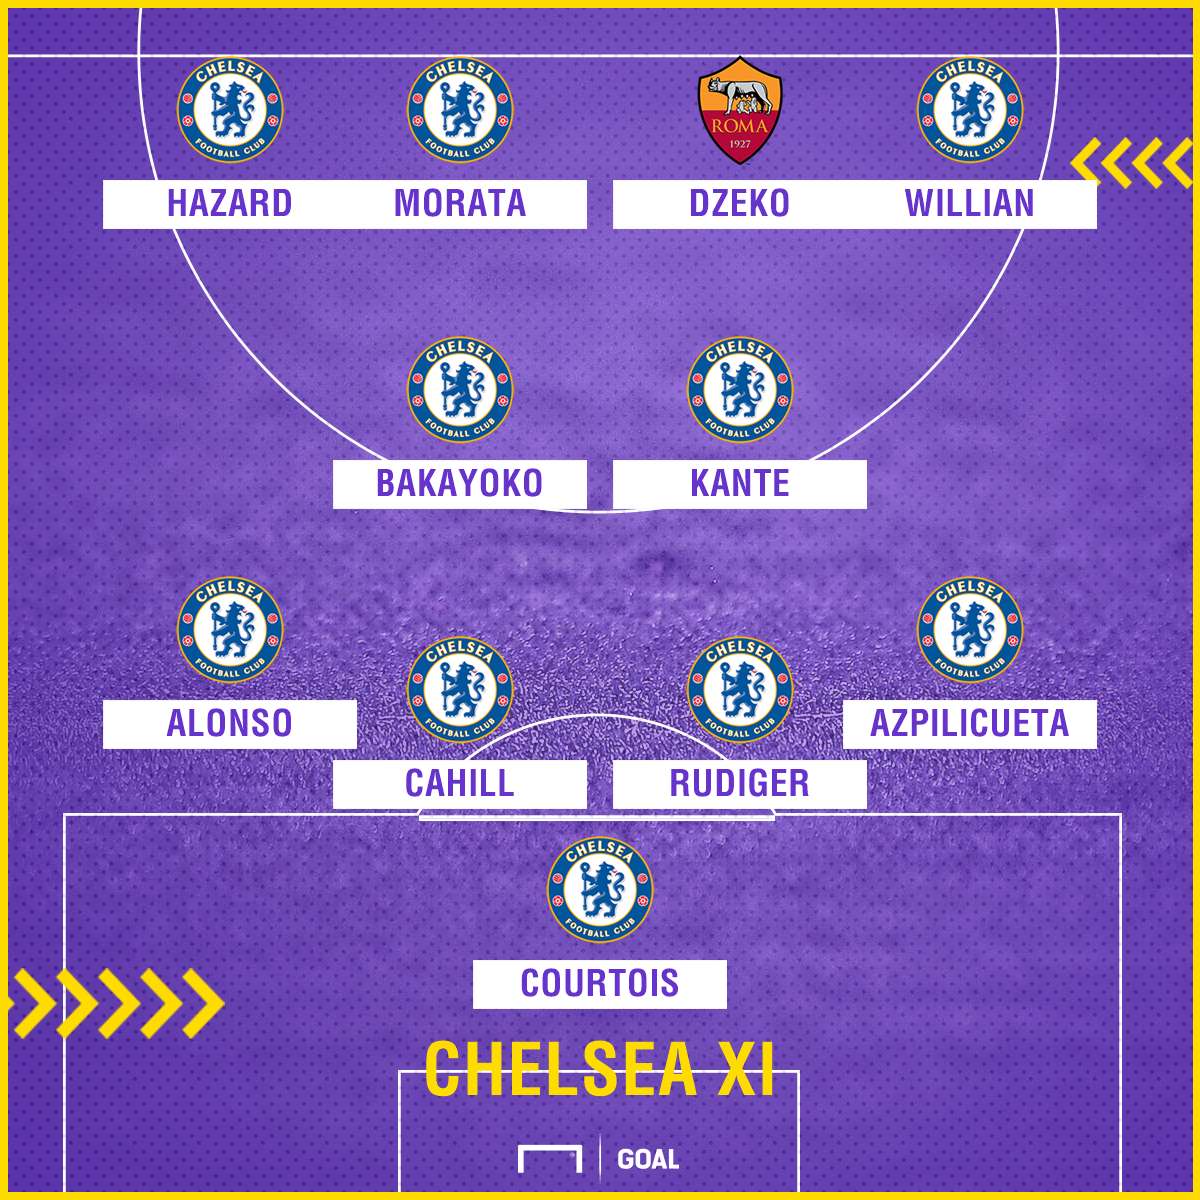 Edin Dzeko in the Chelsea line up